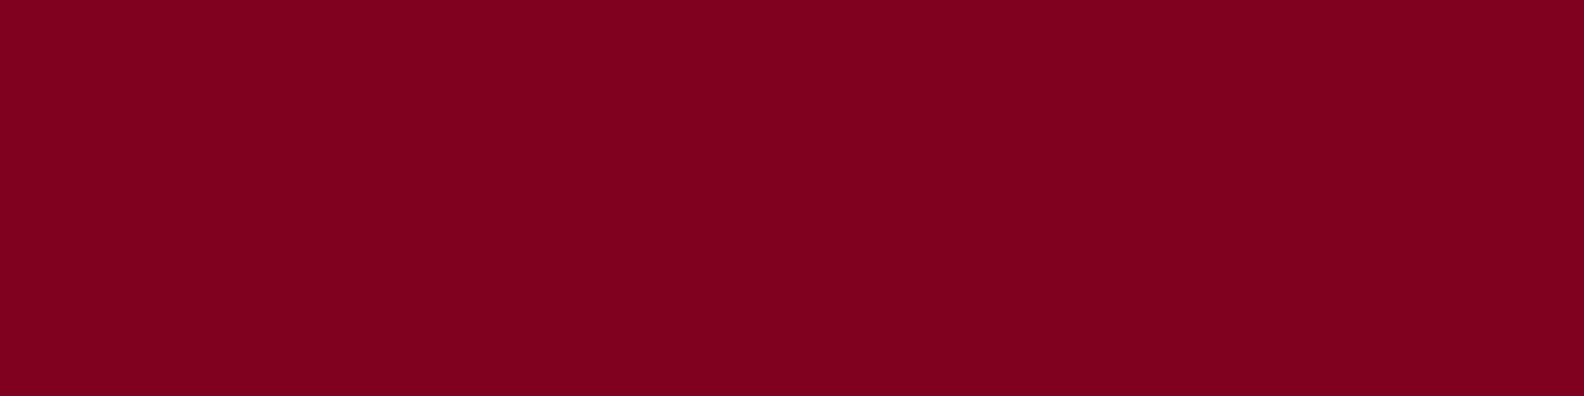 1584x396 Burgundy Solid Color Background